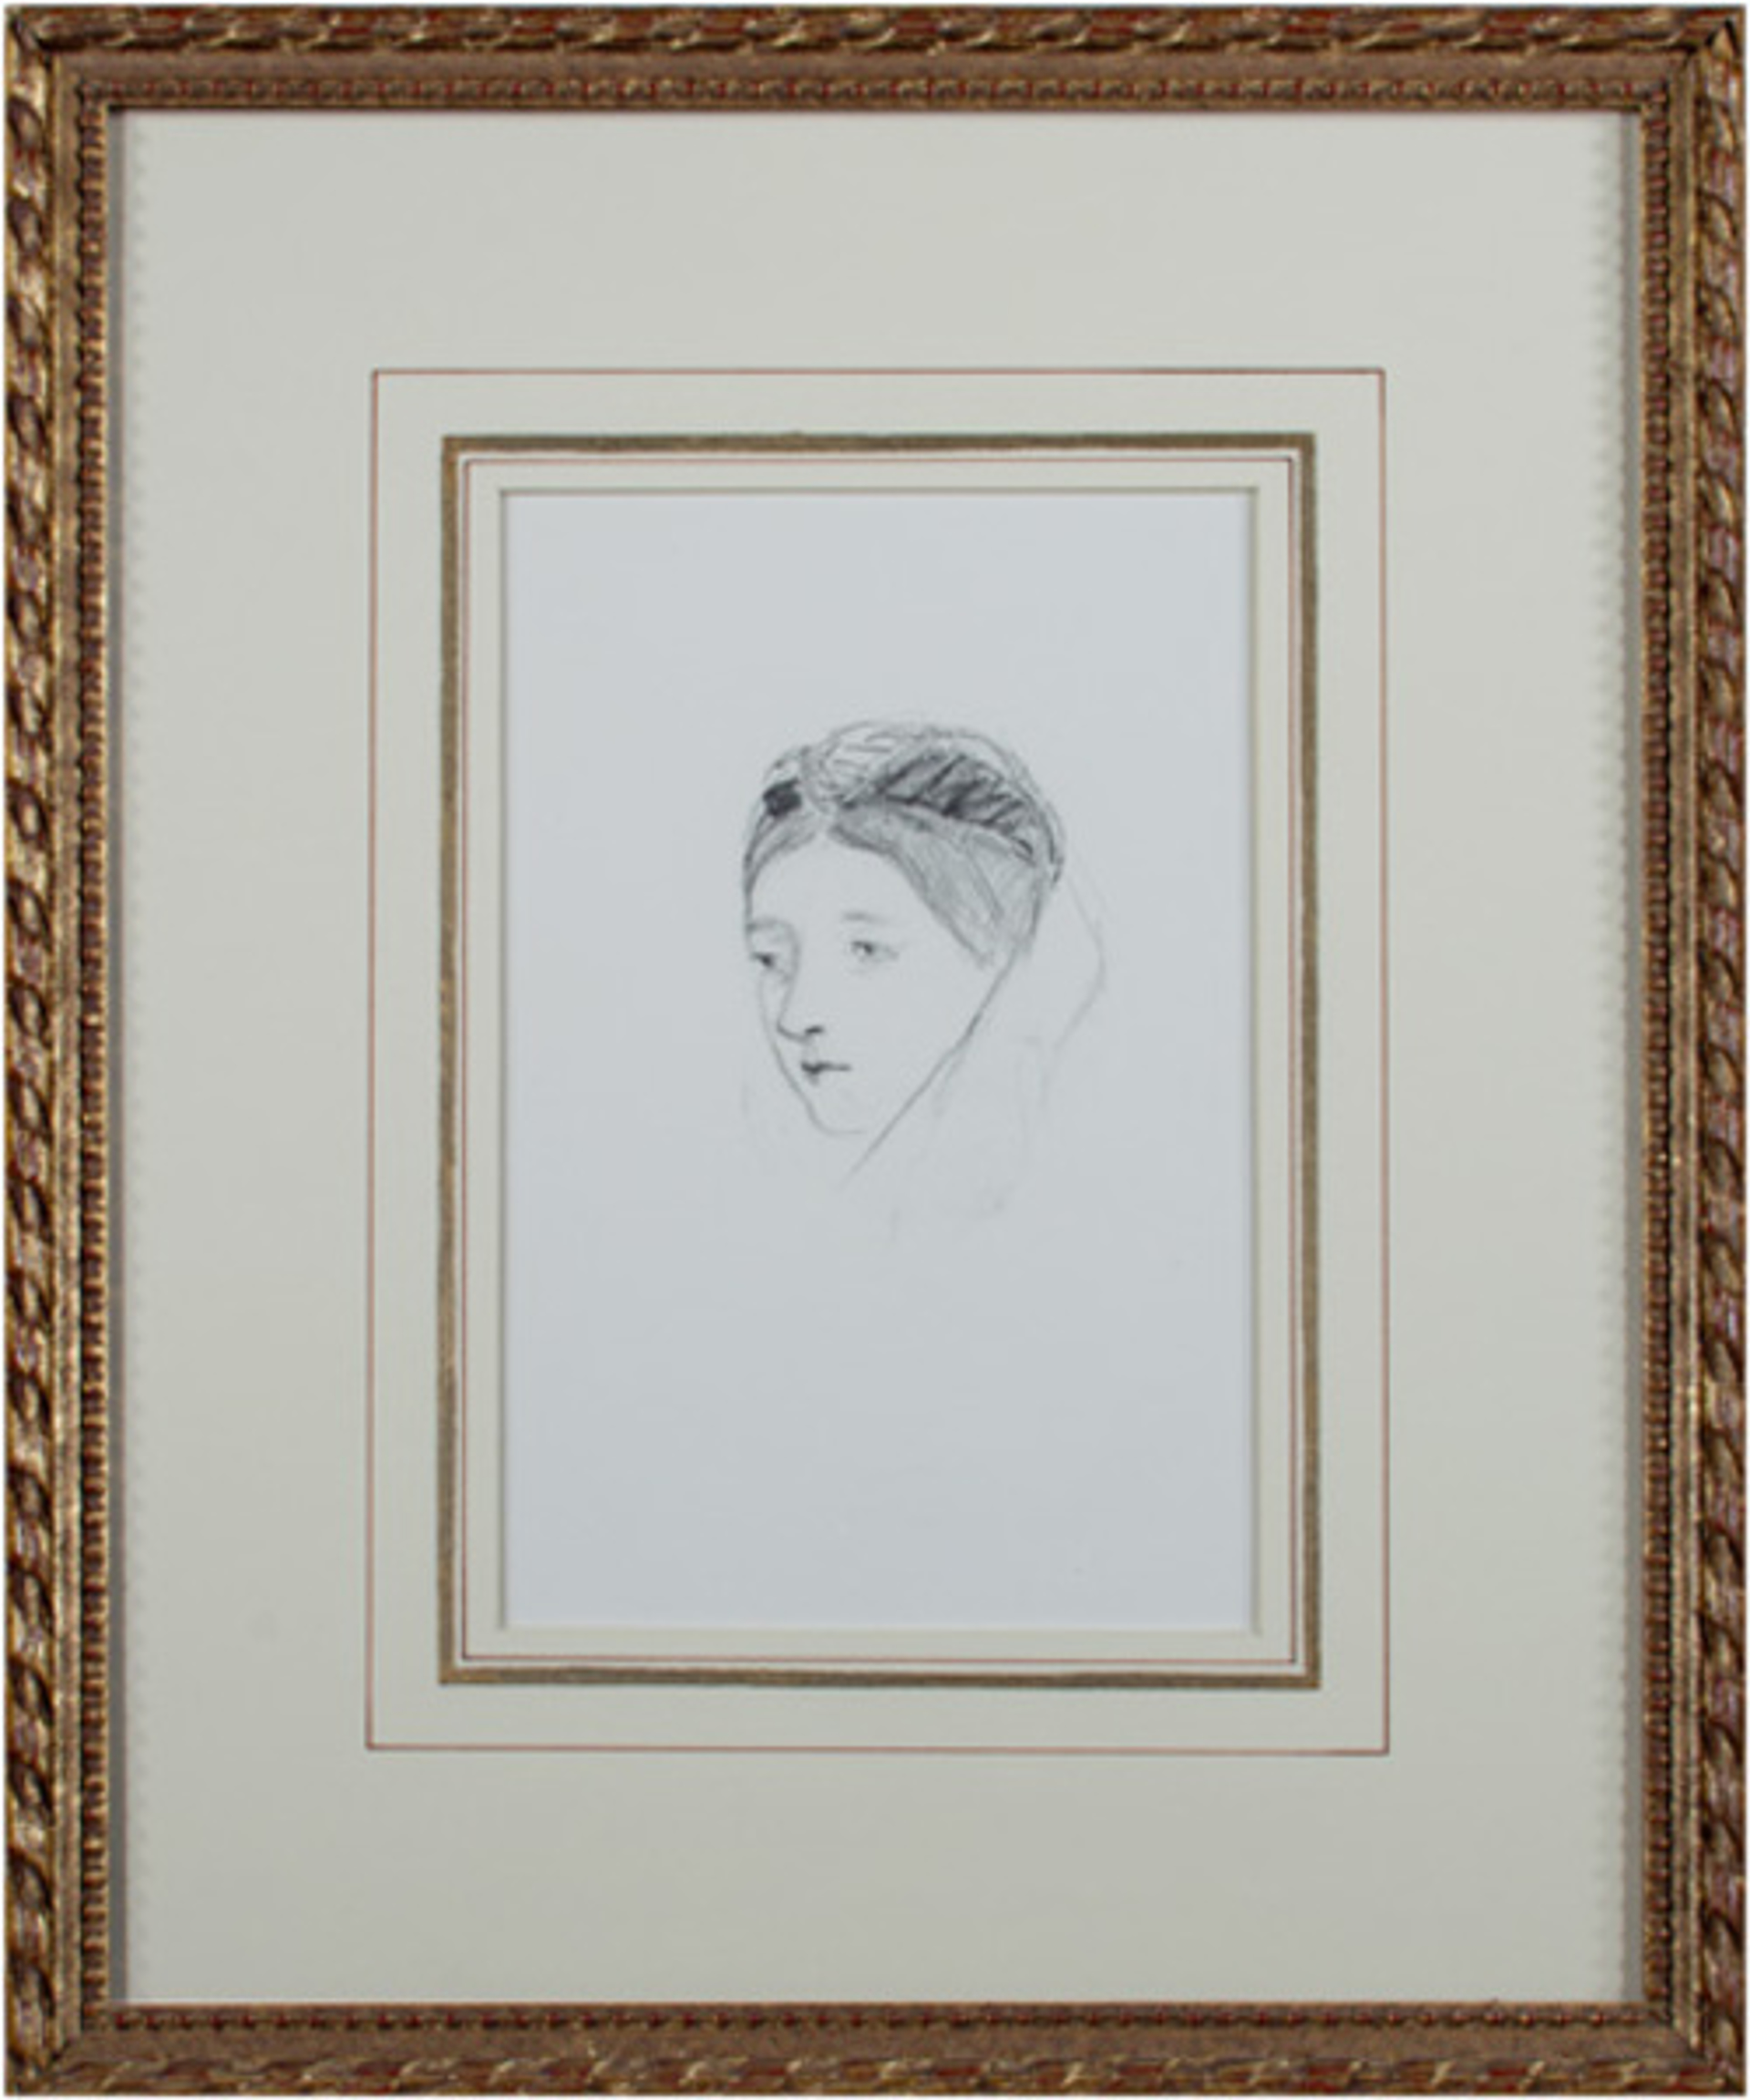 Portrait (Head) of a Woman by Hannah de Rothschild